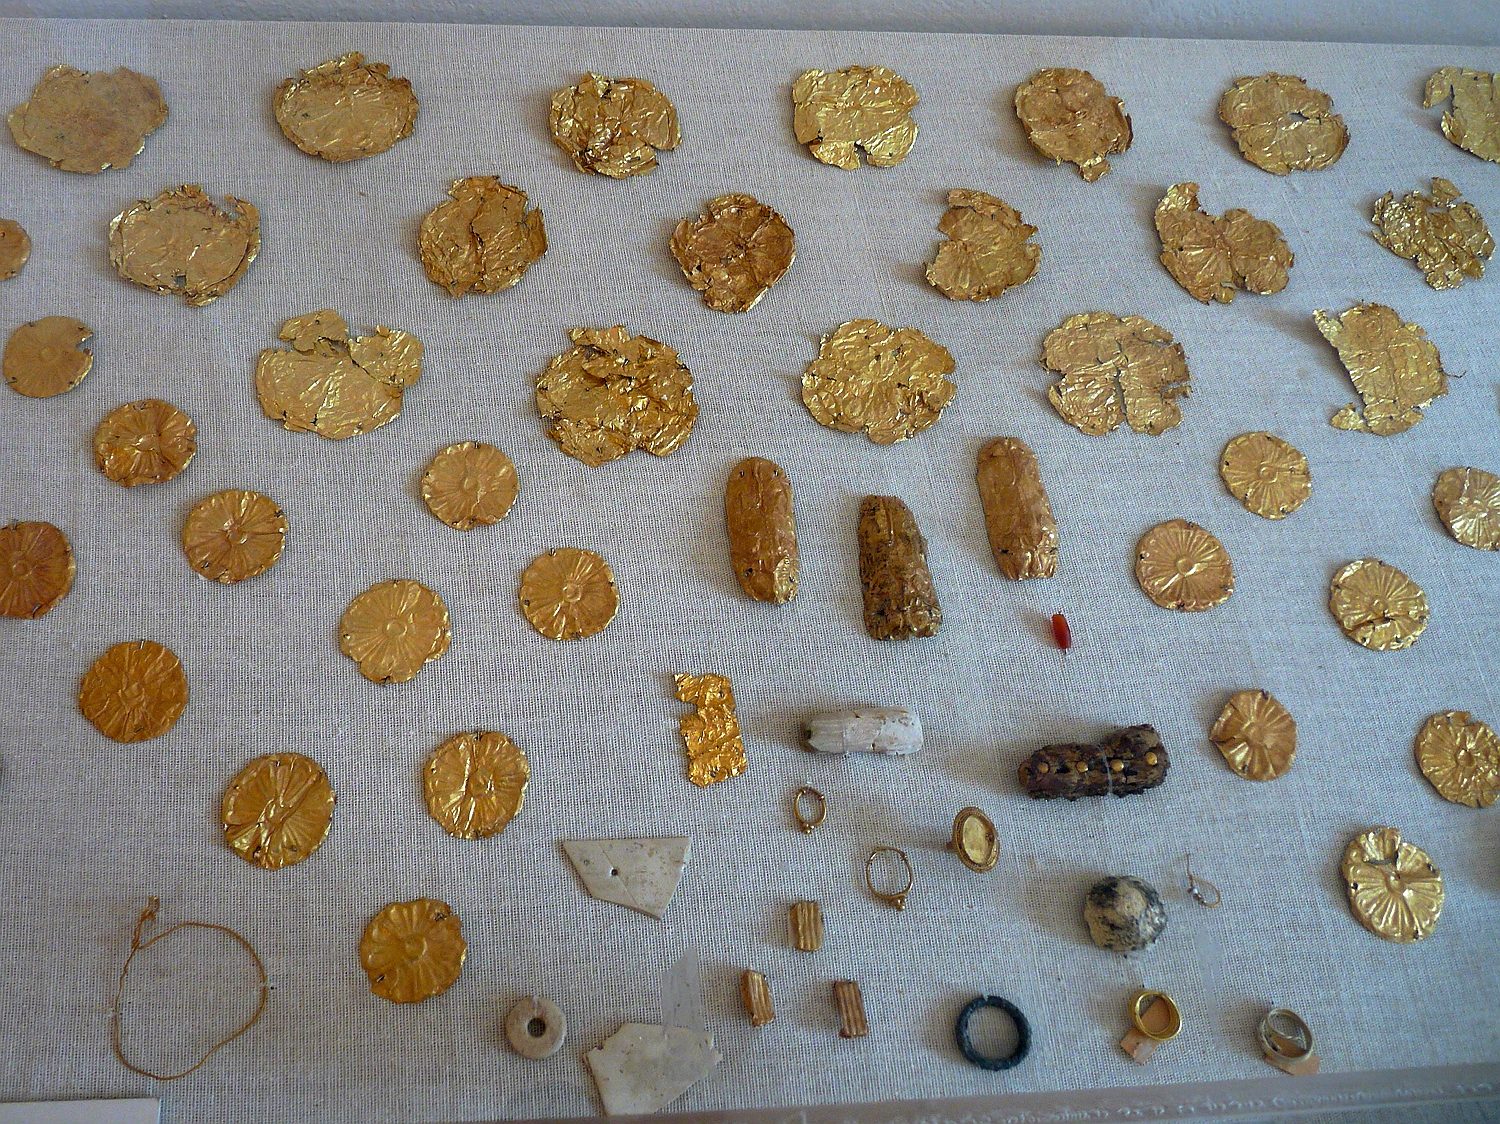 rich gold jewellery from a Mycenaean tomb, Naxos